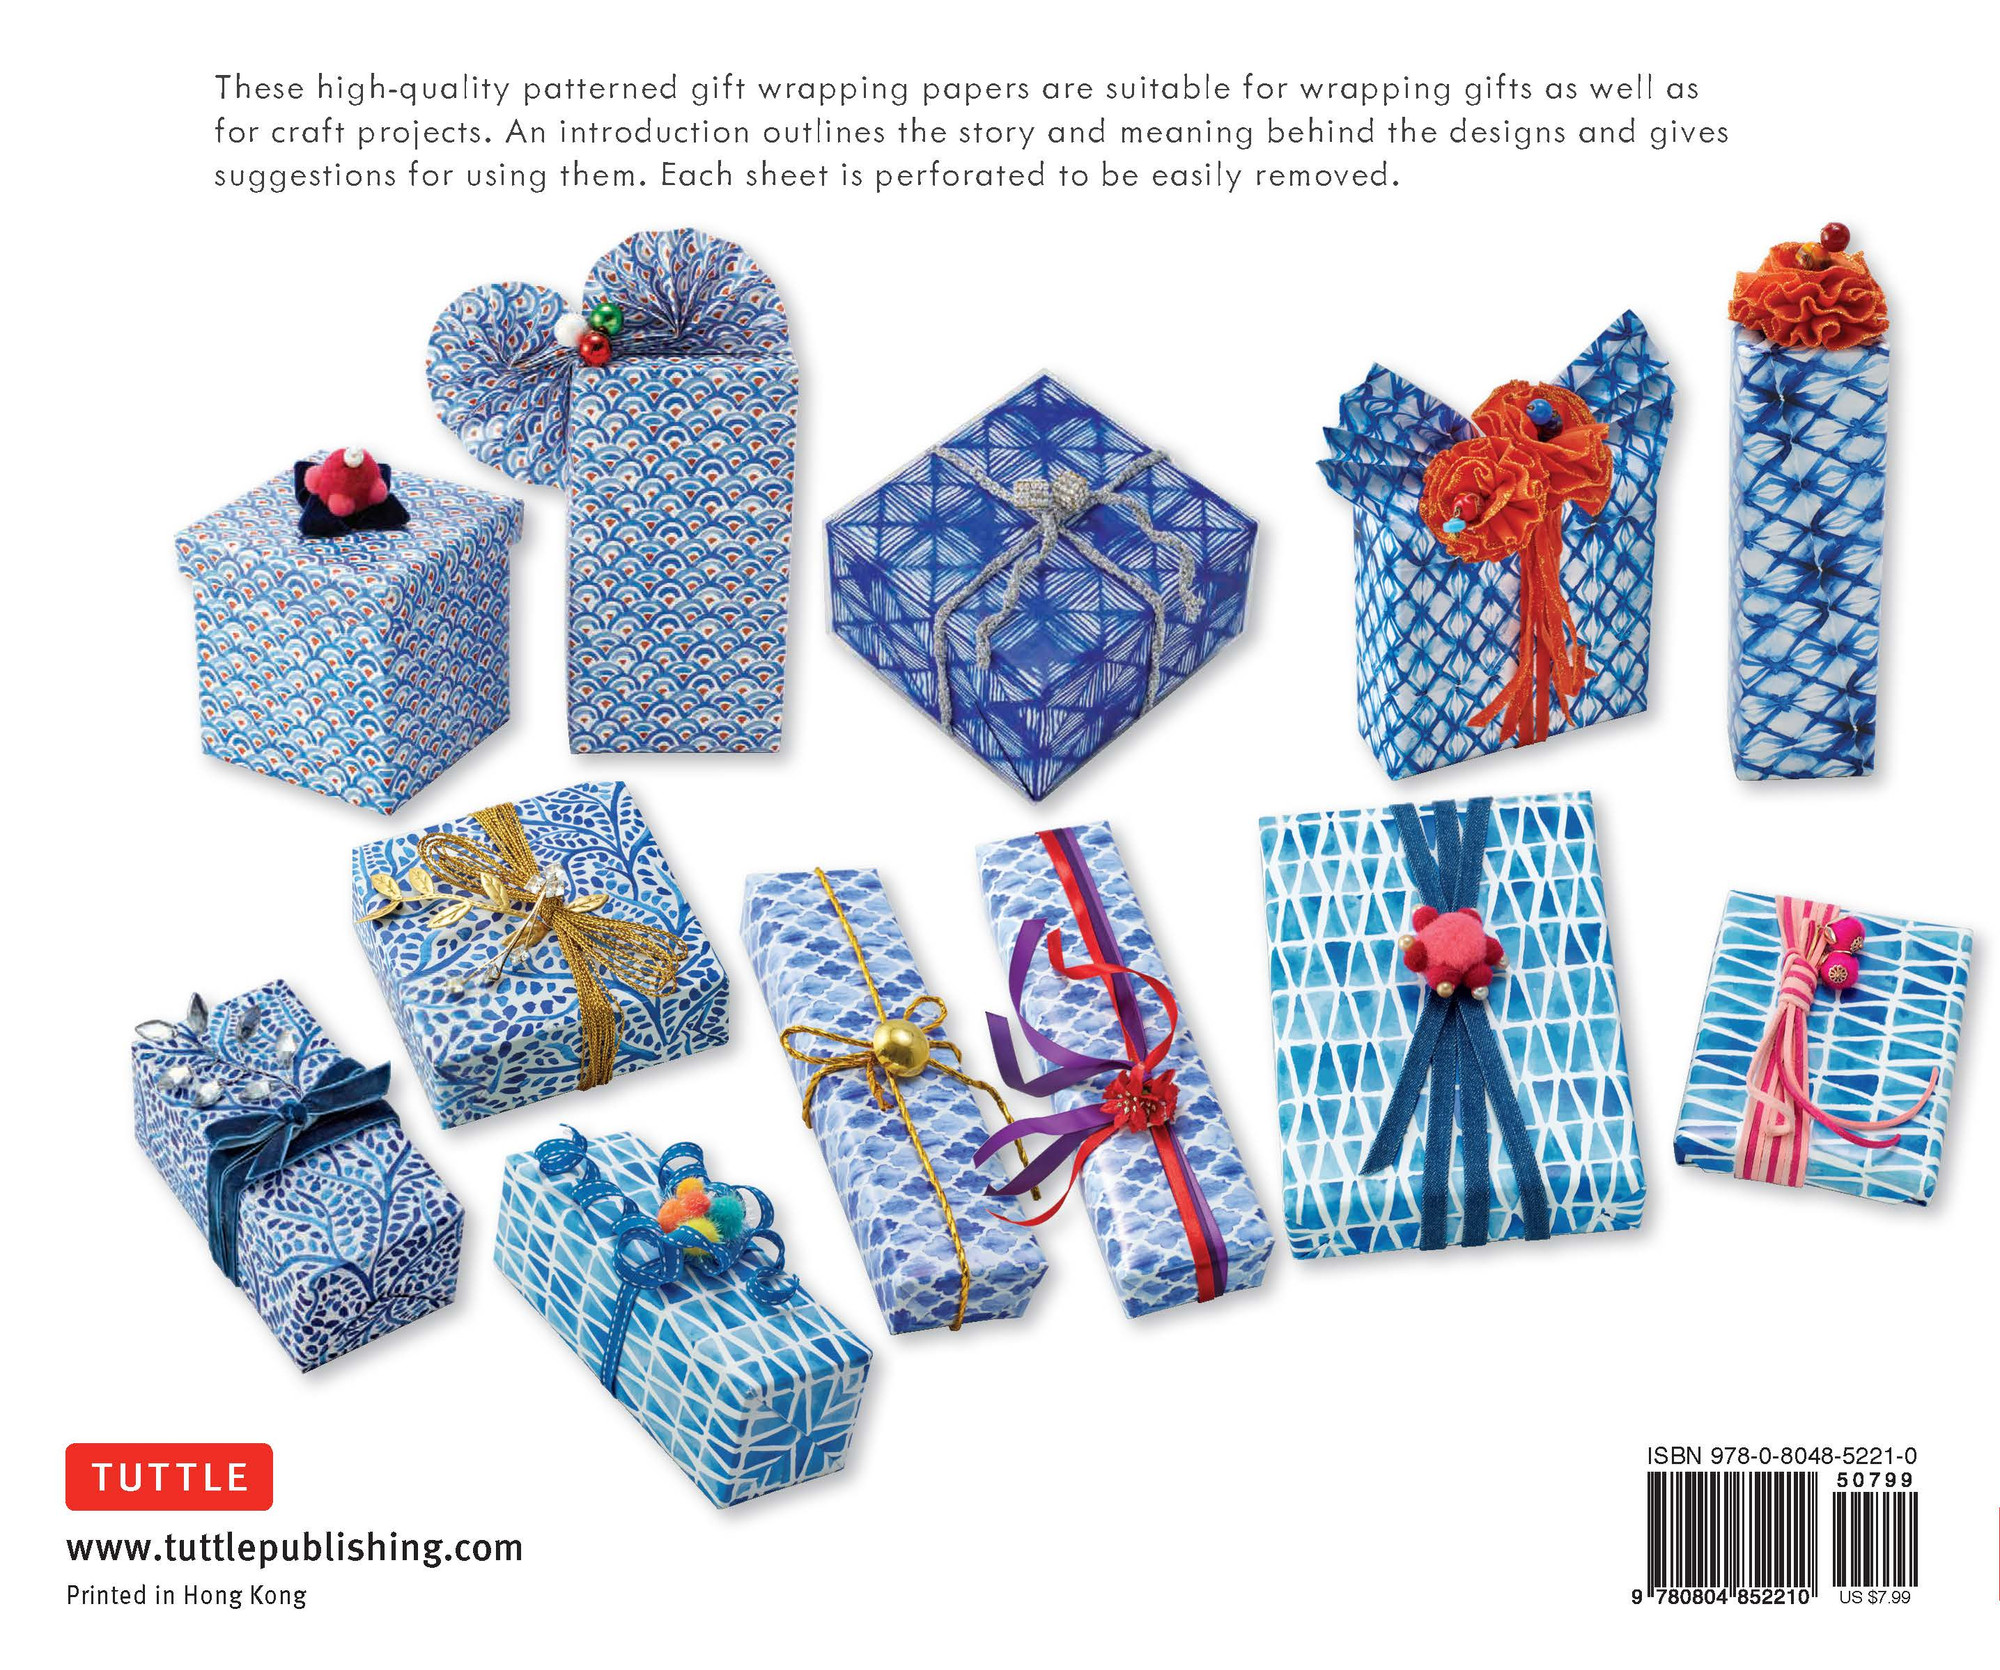 Unique Industries Royal Blue Paper Gift Wrap Tissues, (10 Count)